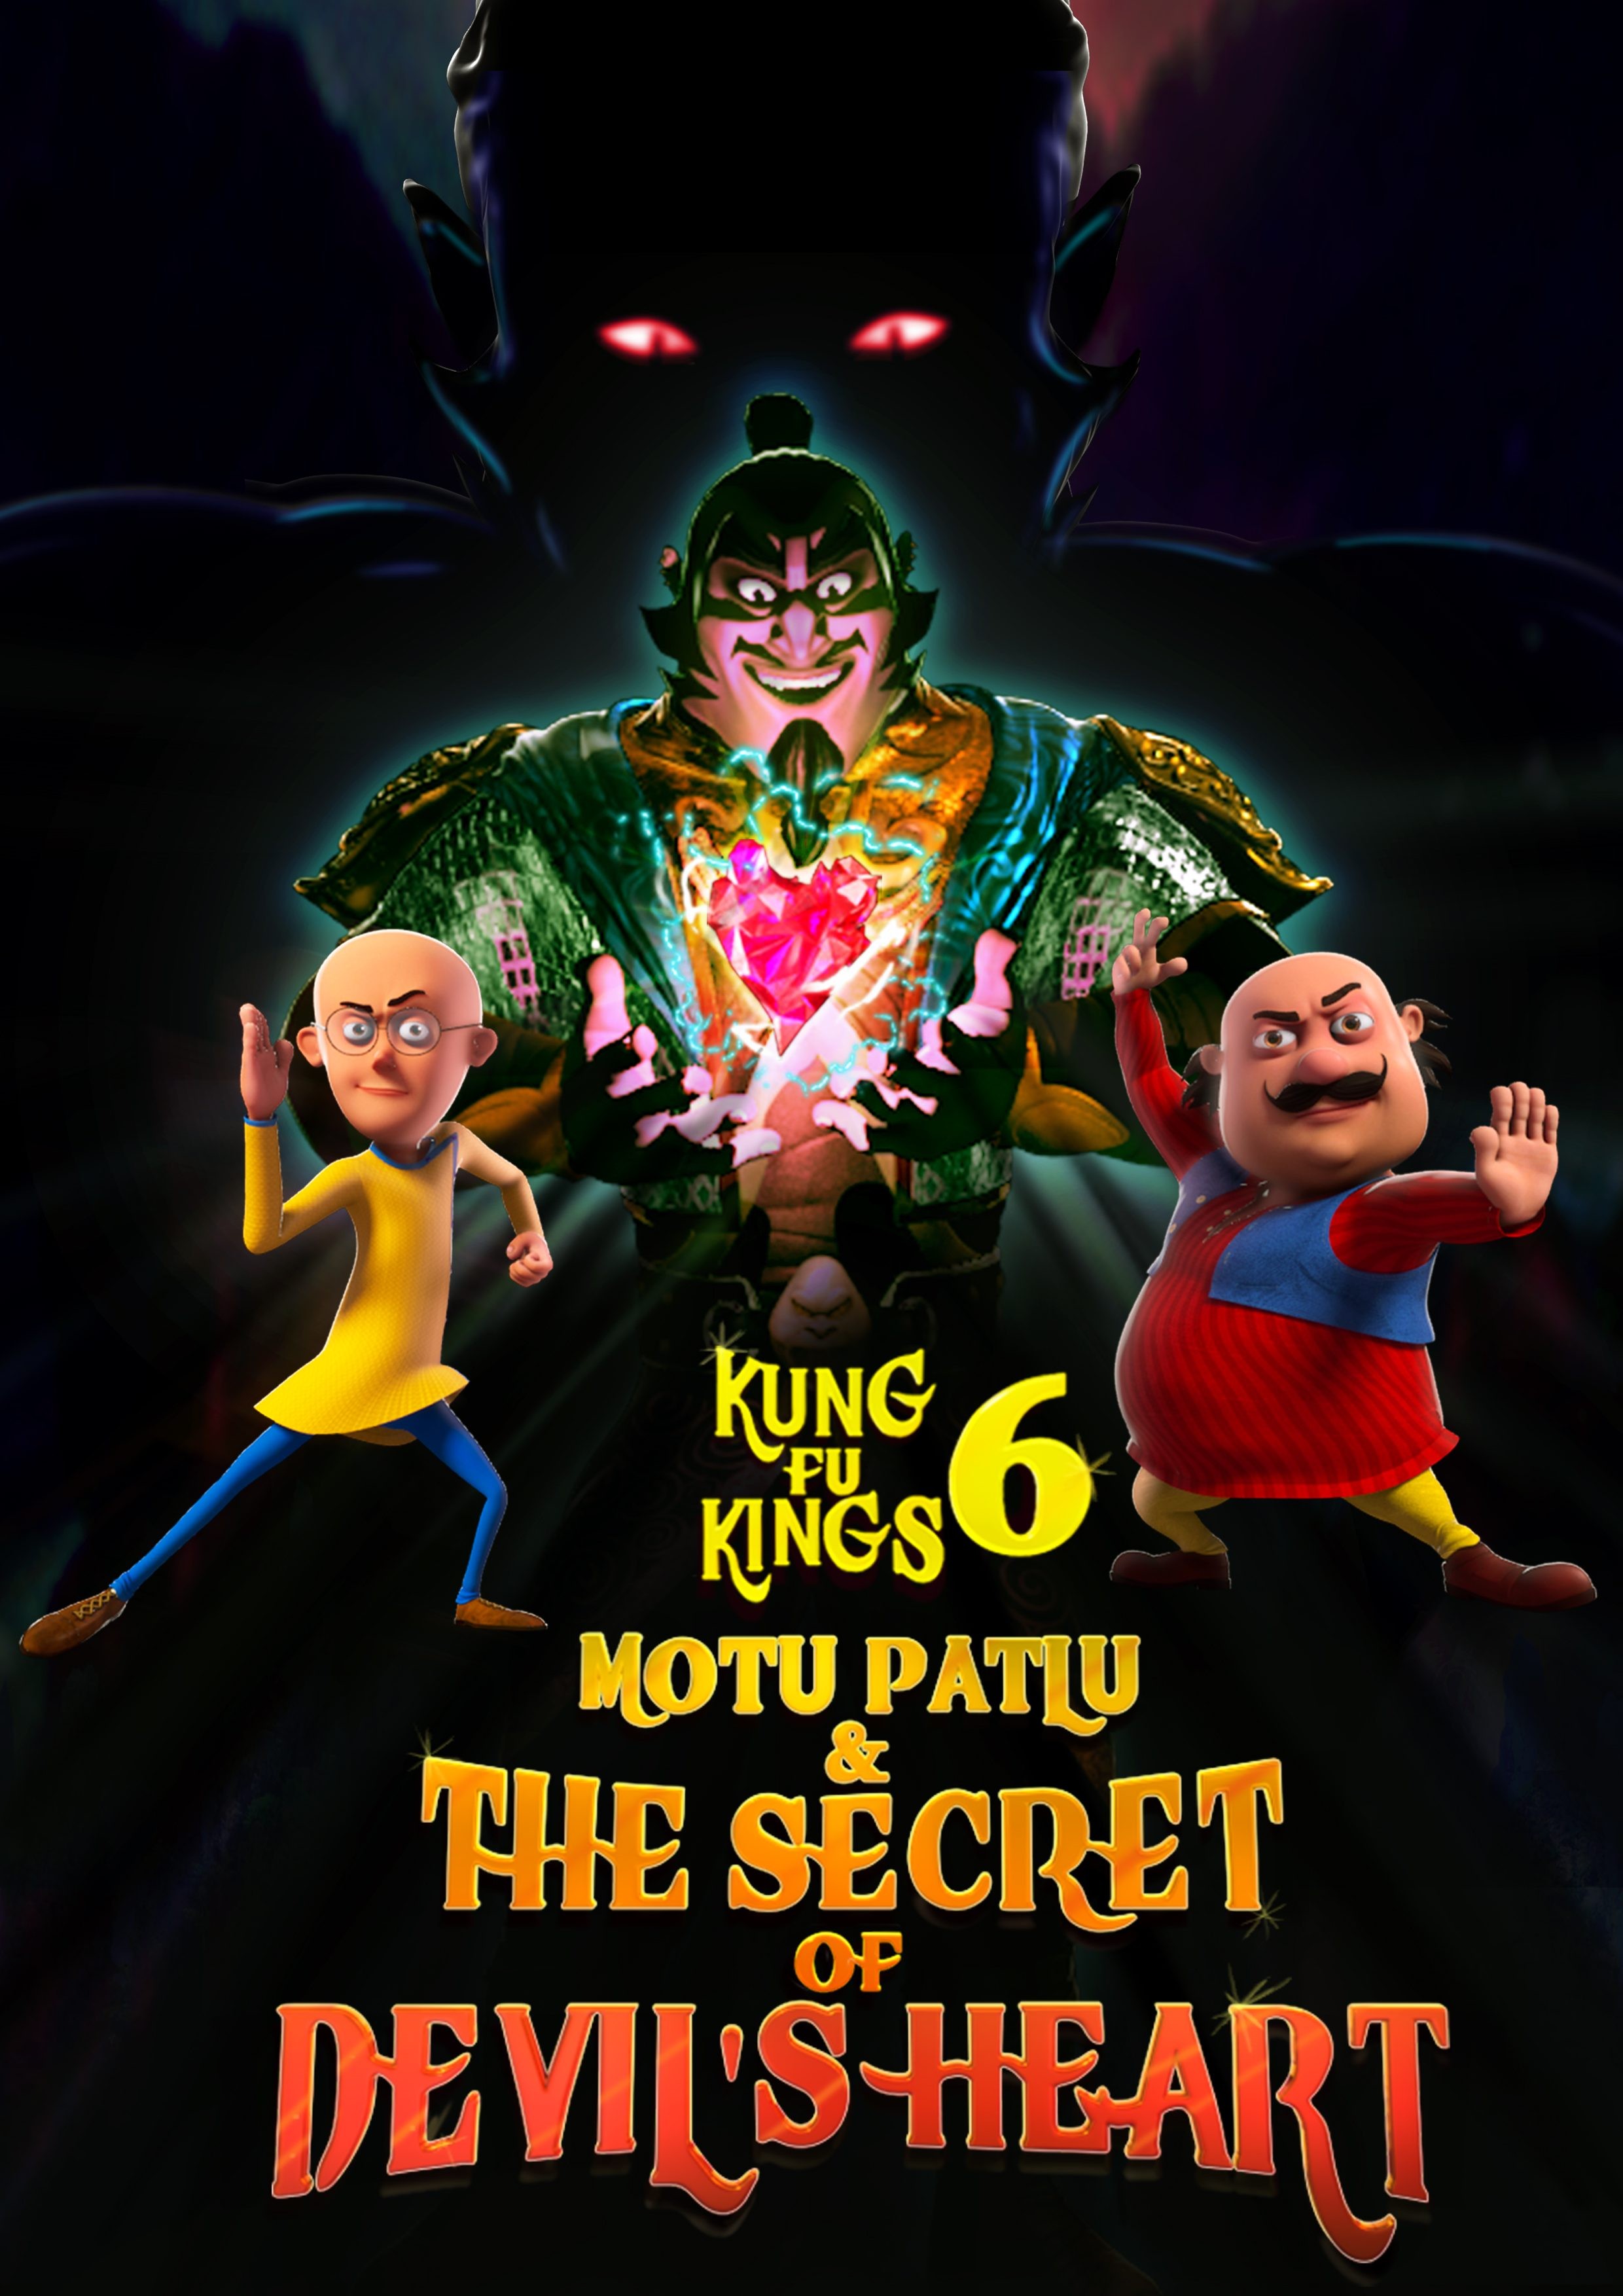 Motu Patlu and the Secret of Devils Heart 2022 Hindi ORG Multi Audio 1080p HDRip 1.62GB Download